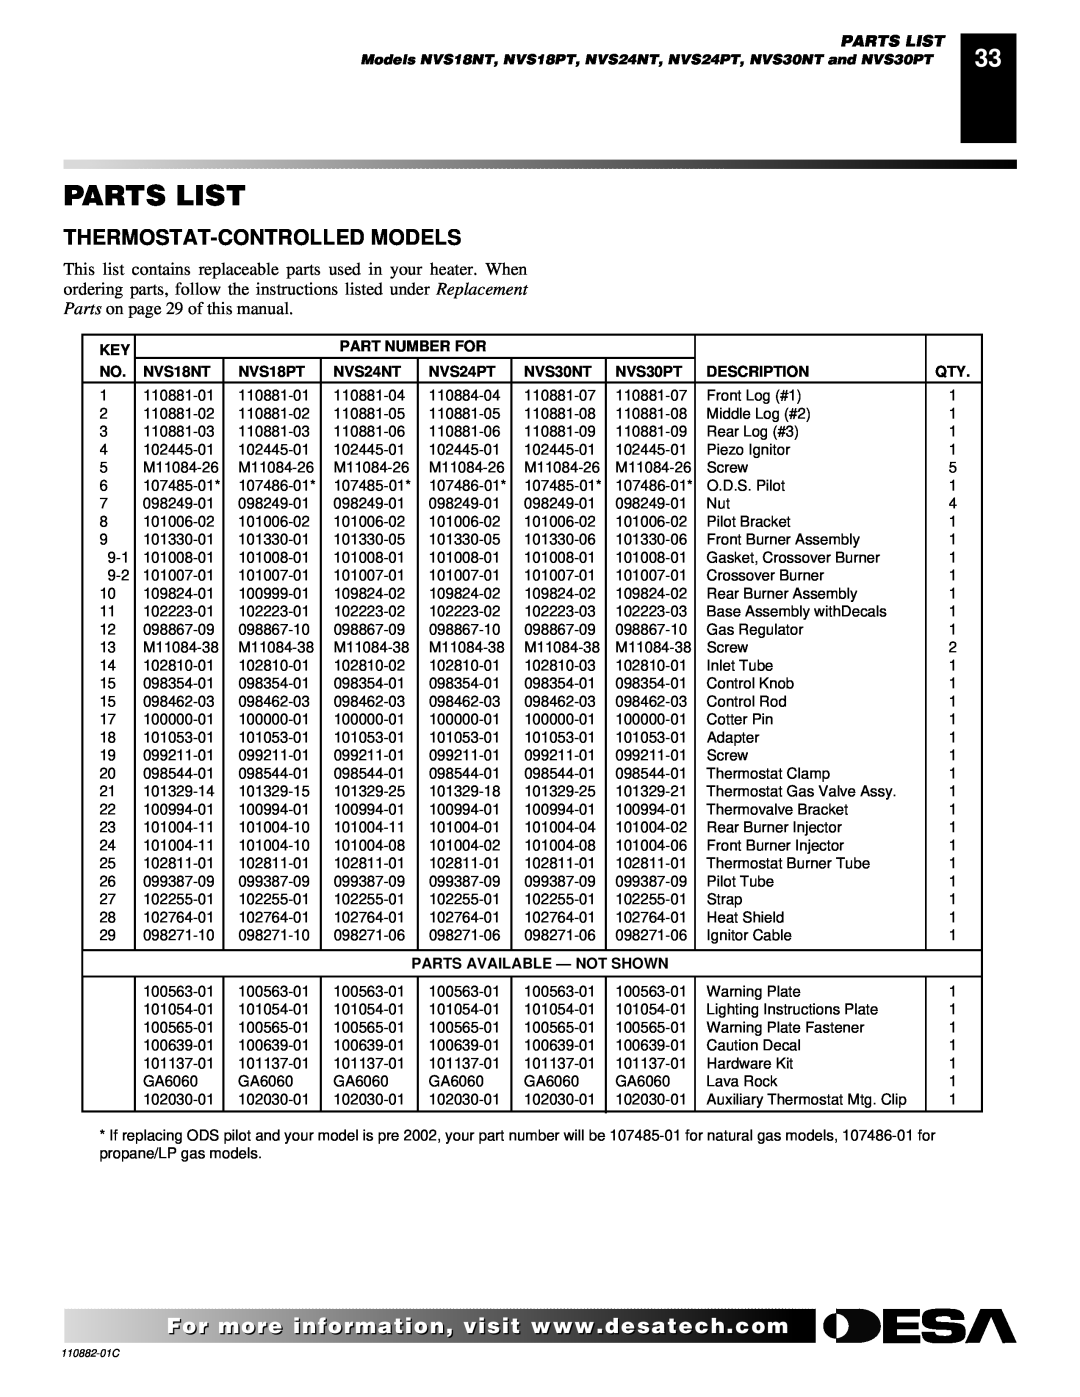 Desa R, V, T, 30 installation manual Parts List, Thermostat-Controlledmodels 